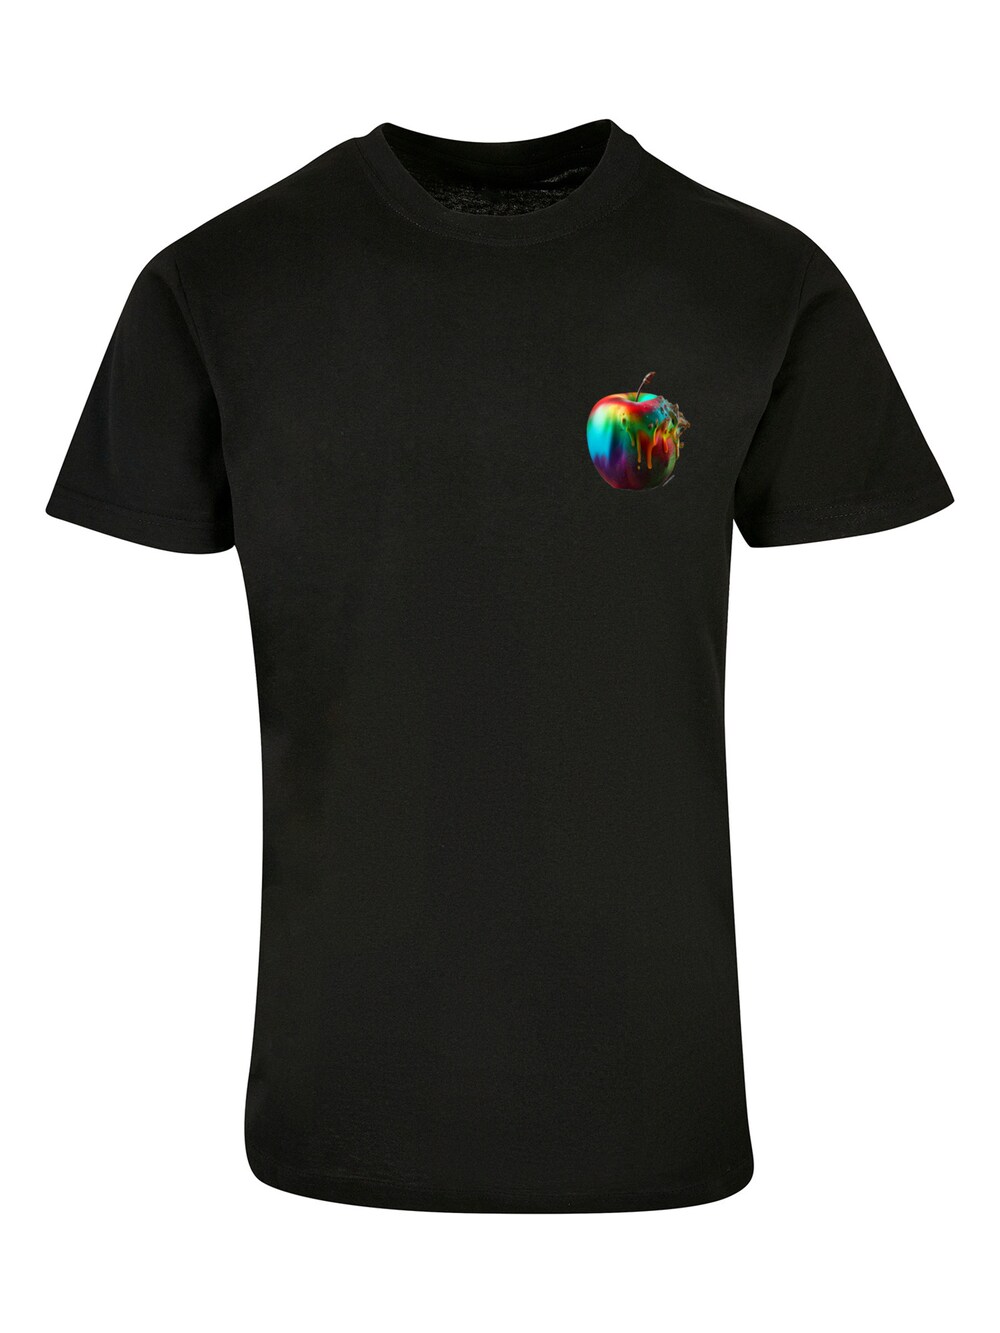 Футболка F4Nt4Stic Colorfood Collection - Rainbow Apple, черный